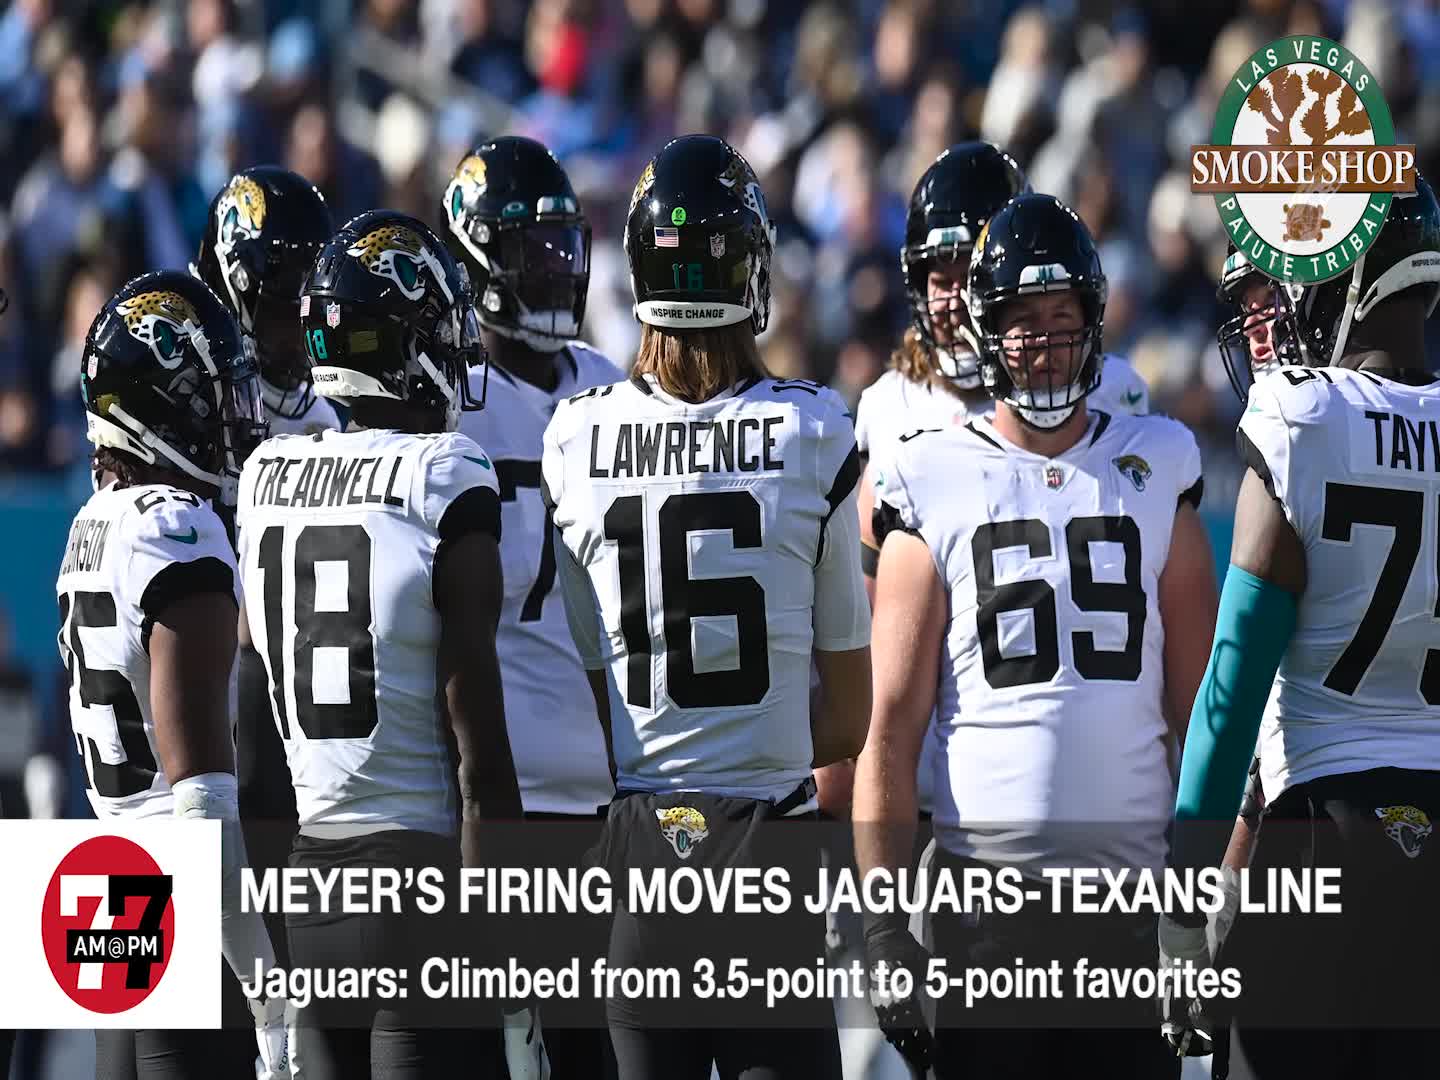 7@7PM Meyer’s Firing Moves Jaguars-Texans Lines